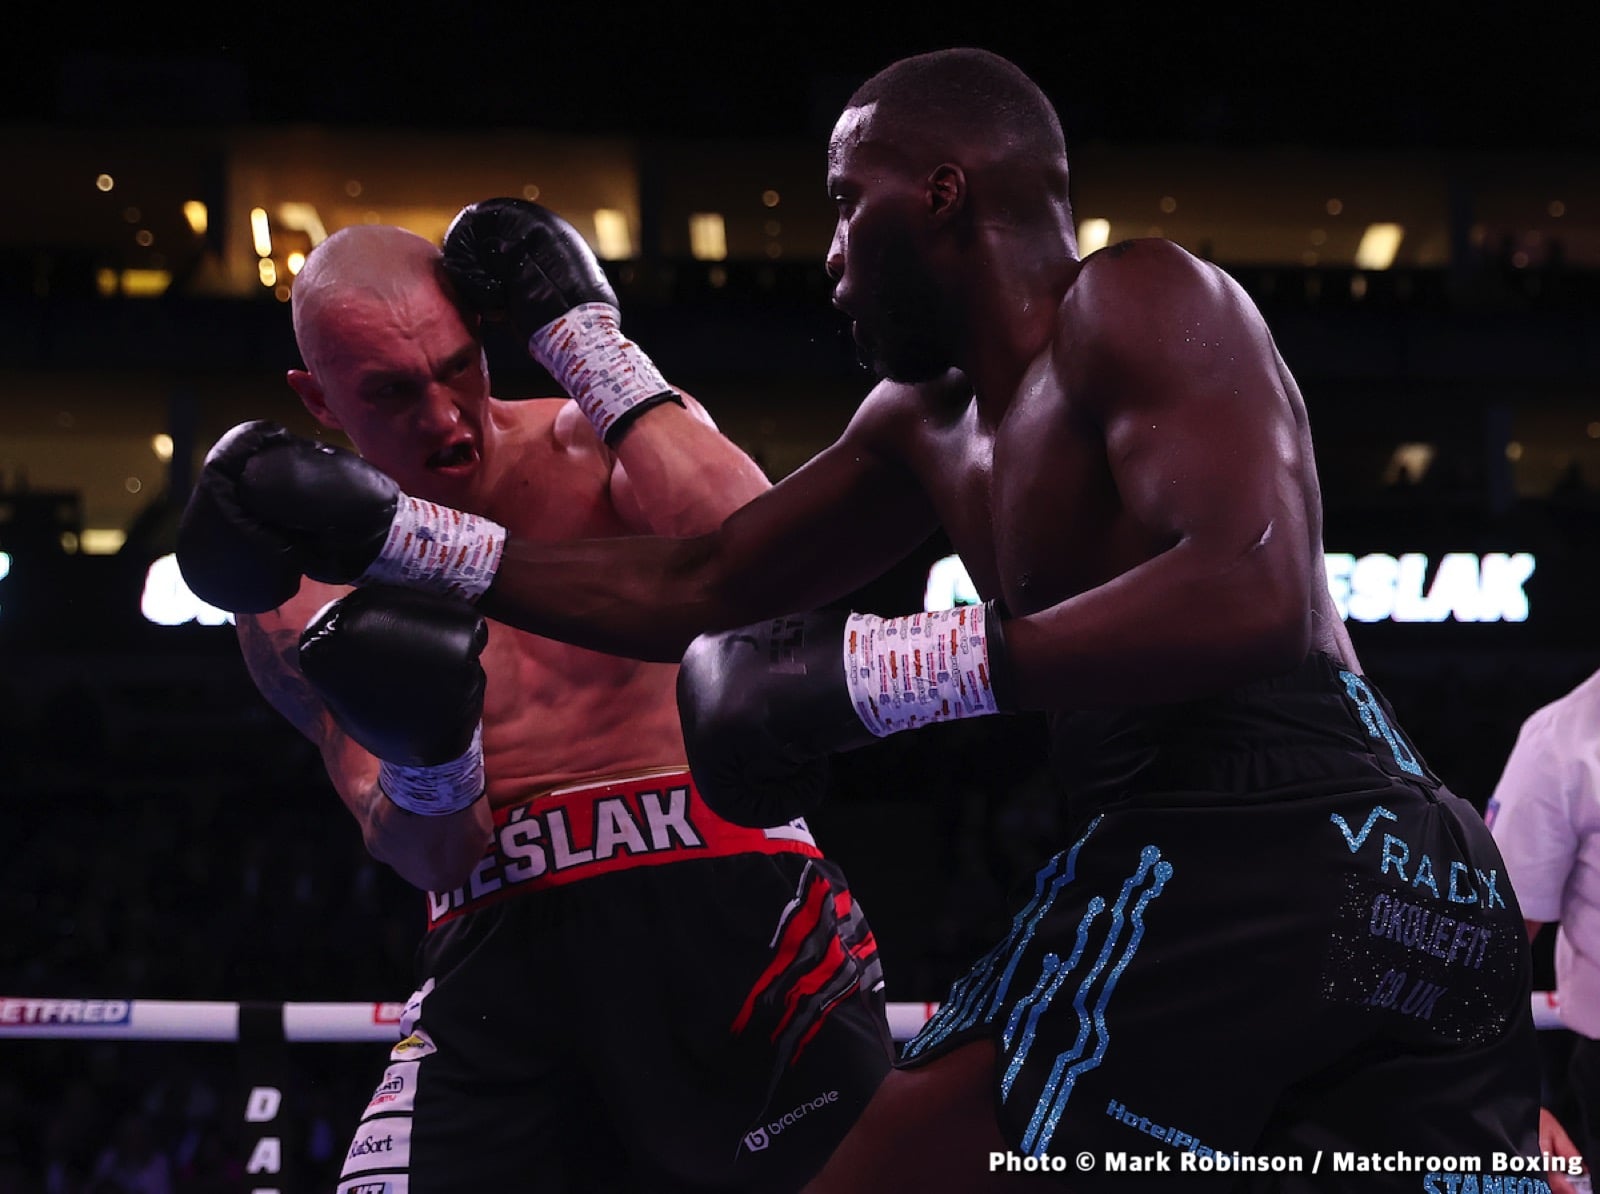 Campbell Hatton, Fabio Wardley, Karim Guerfi, Lawrence Okolie, Michal Cieslak: boxing image / photo